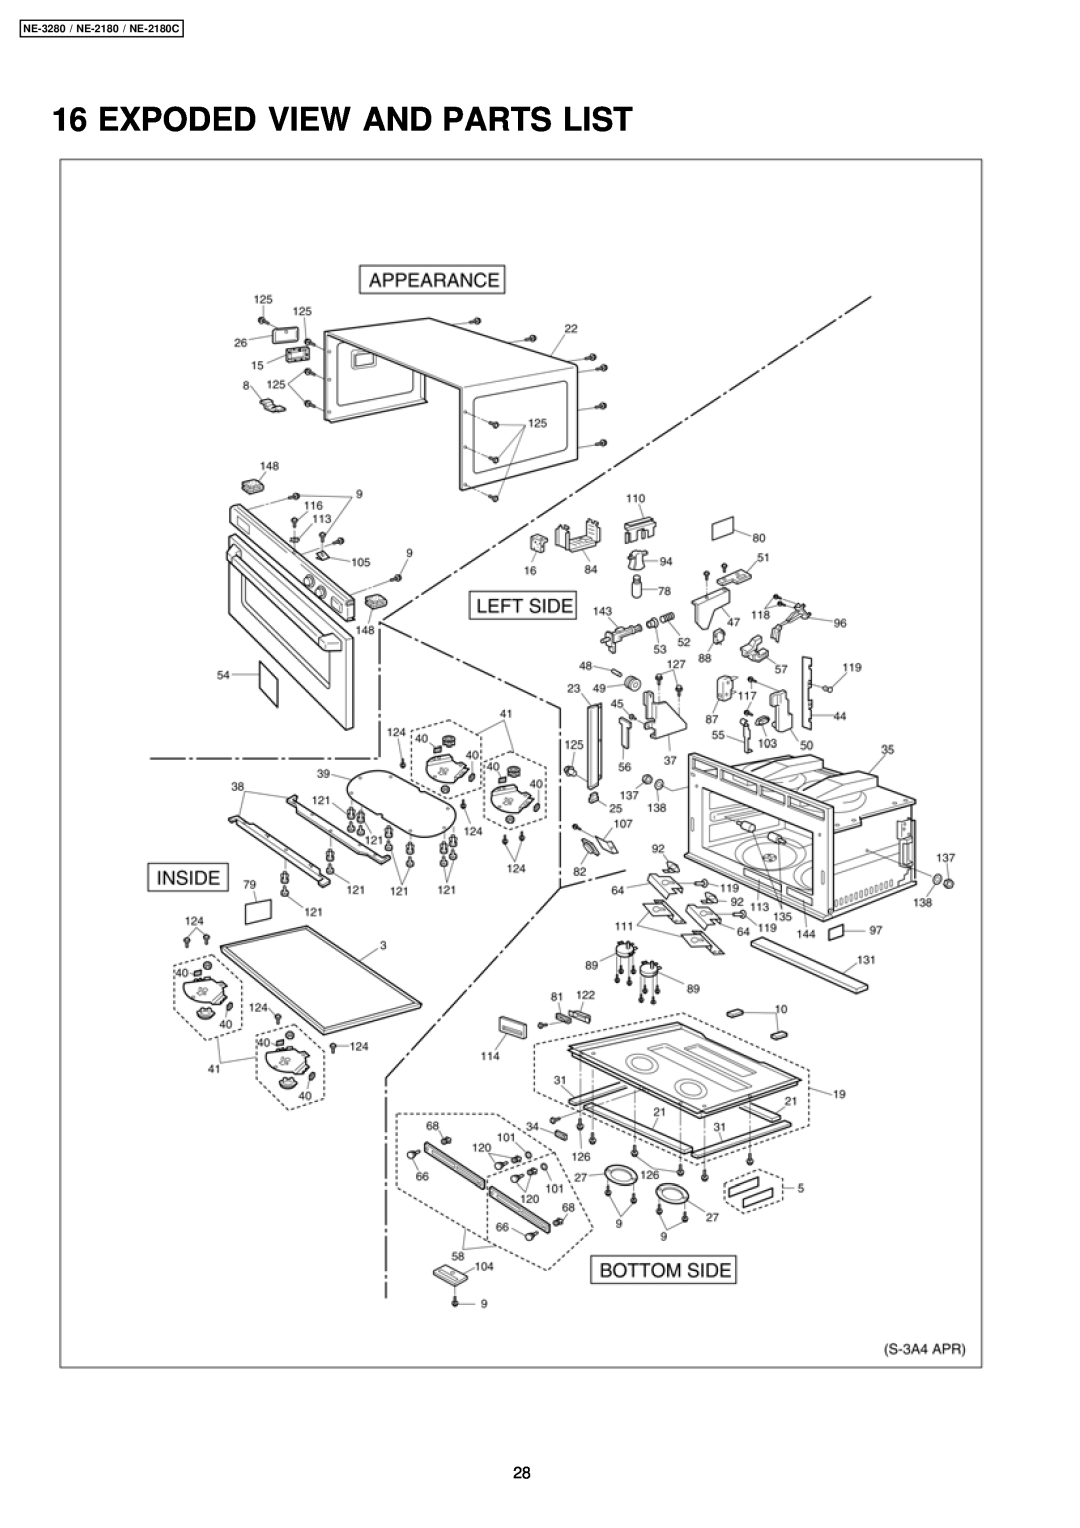 Panasonic manual Expoded View And Parts List, NE-3280 / NE-2180 / NE-2180C 